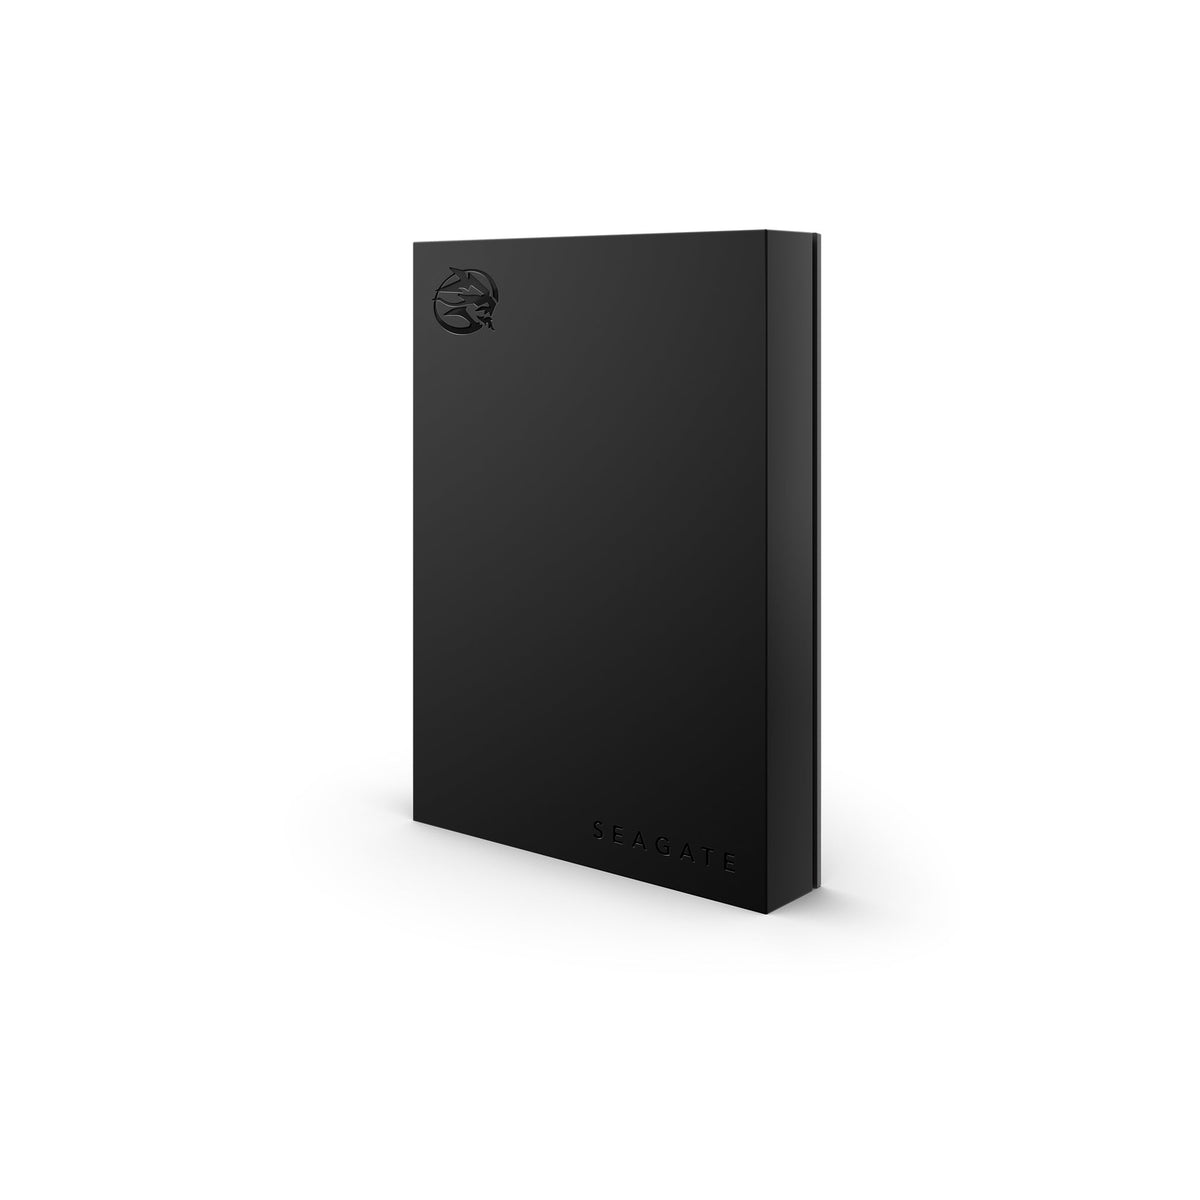 Seagate External HDD Game Drive FireCuda 5000 GB Black